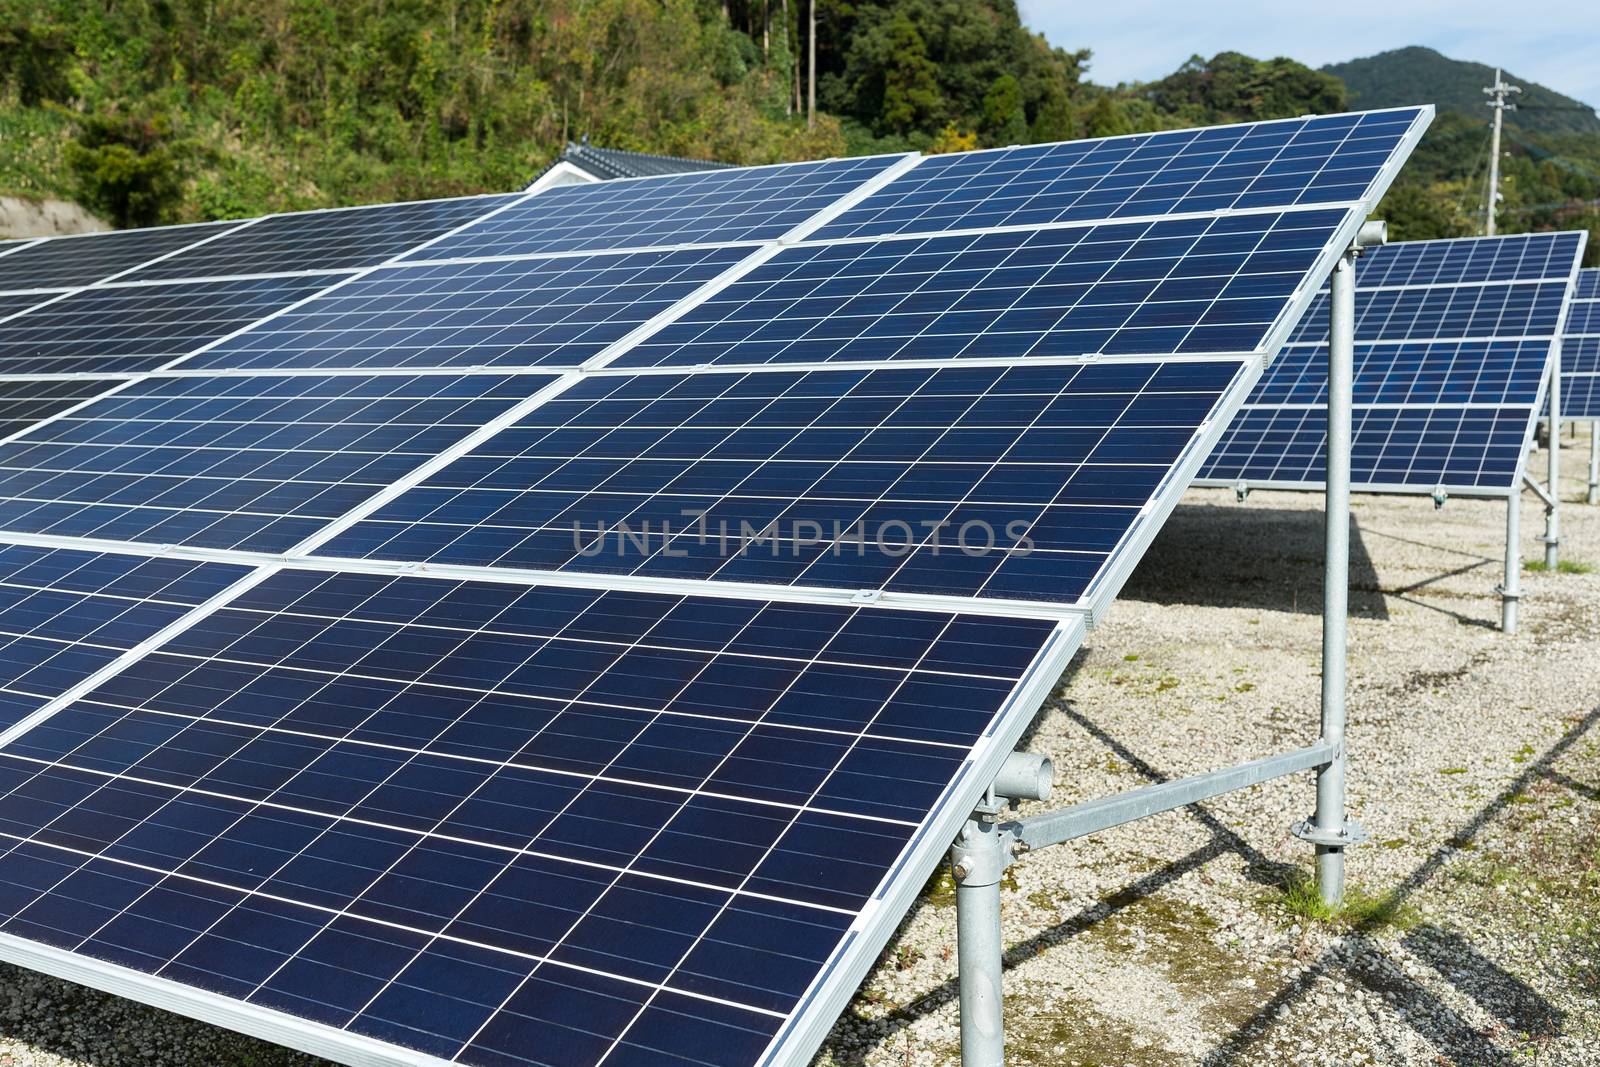 Solar energy panel by leungchopan